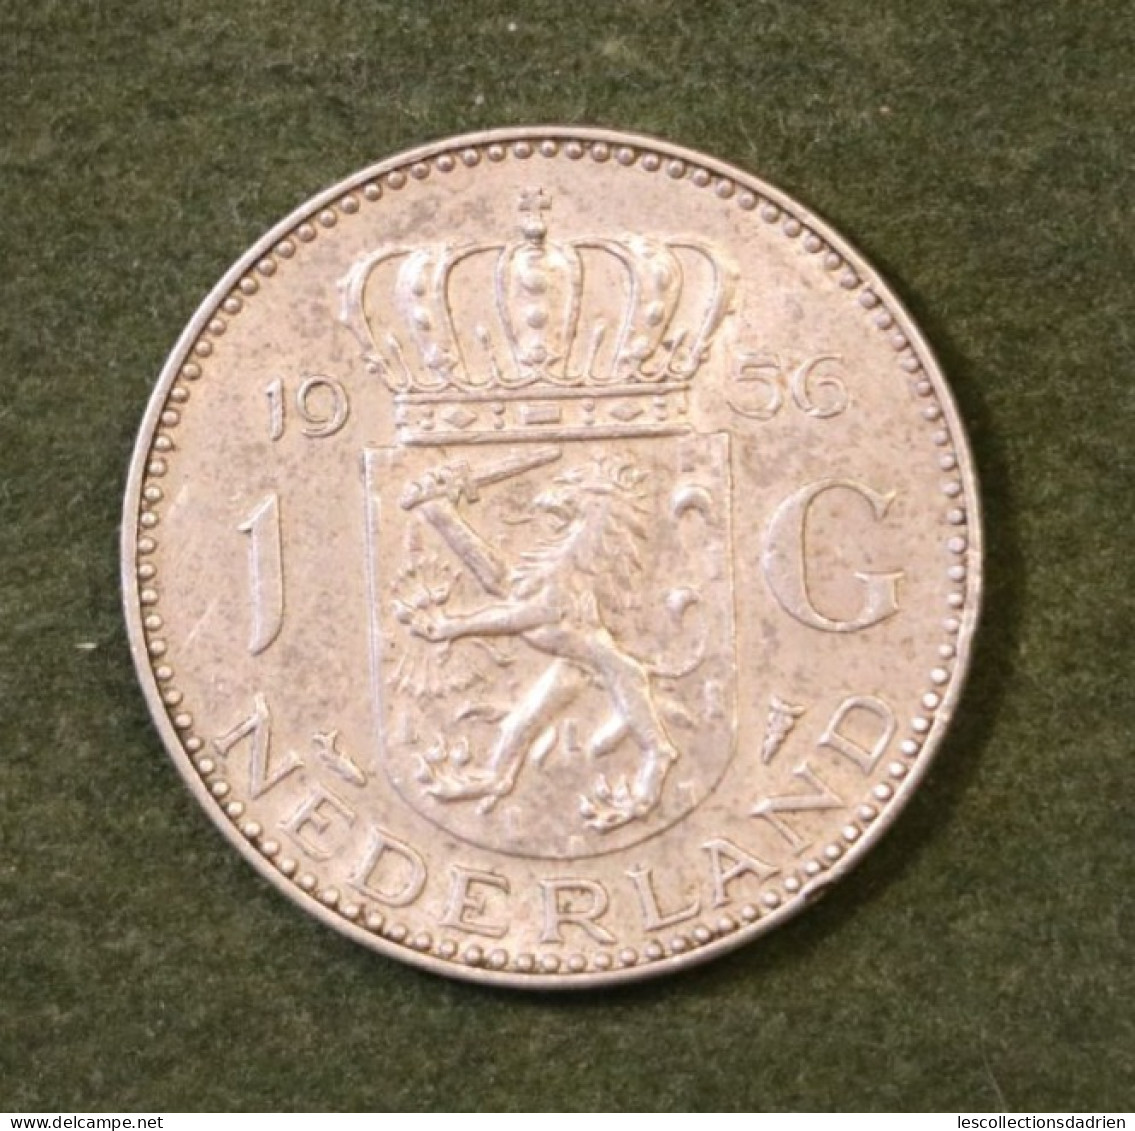 Pièce En Argent Des Pays-Bas 1 Gulden 1956  - Dutch Silver Coin/1 - 1948-1980: Juliana